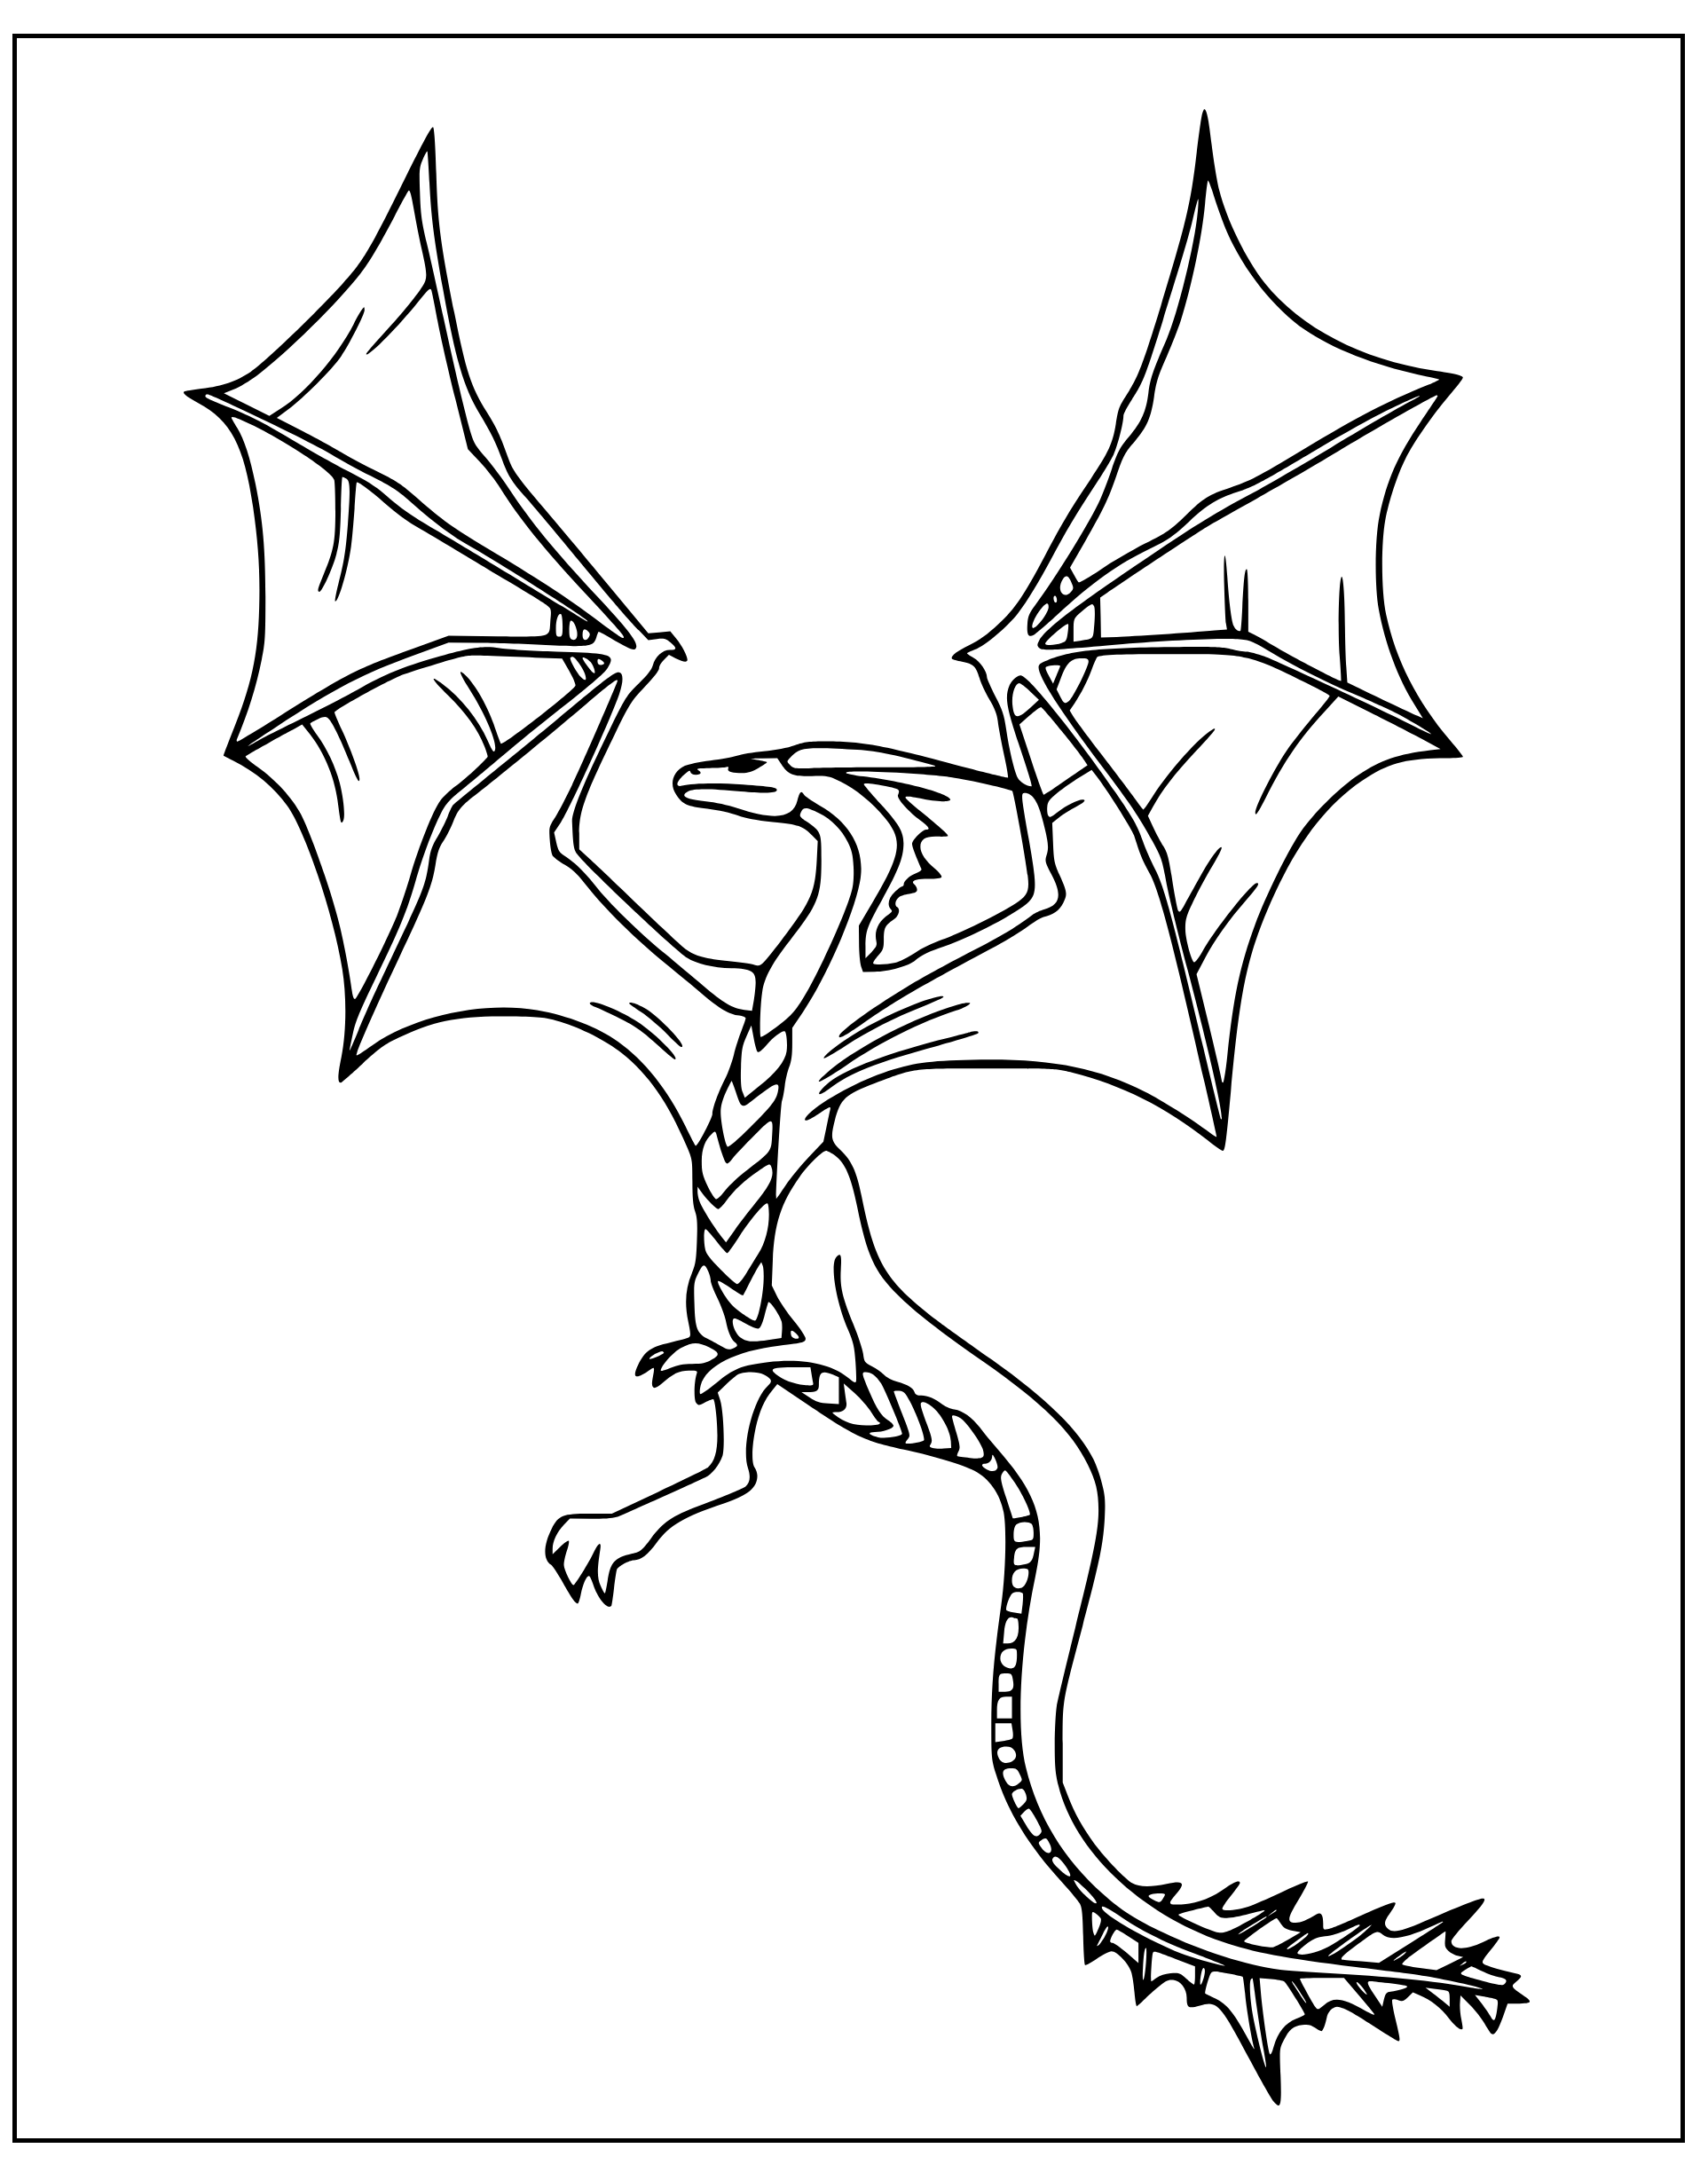 Printable Flying Dragon Coloring Page for kids.